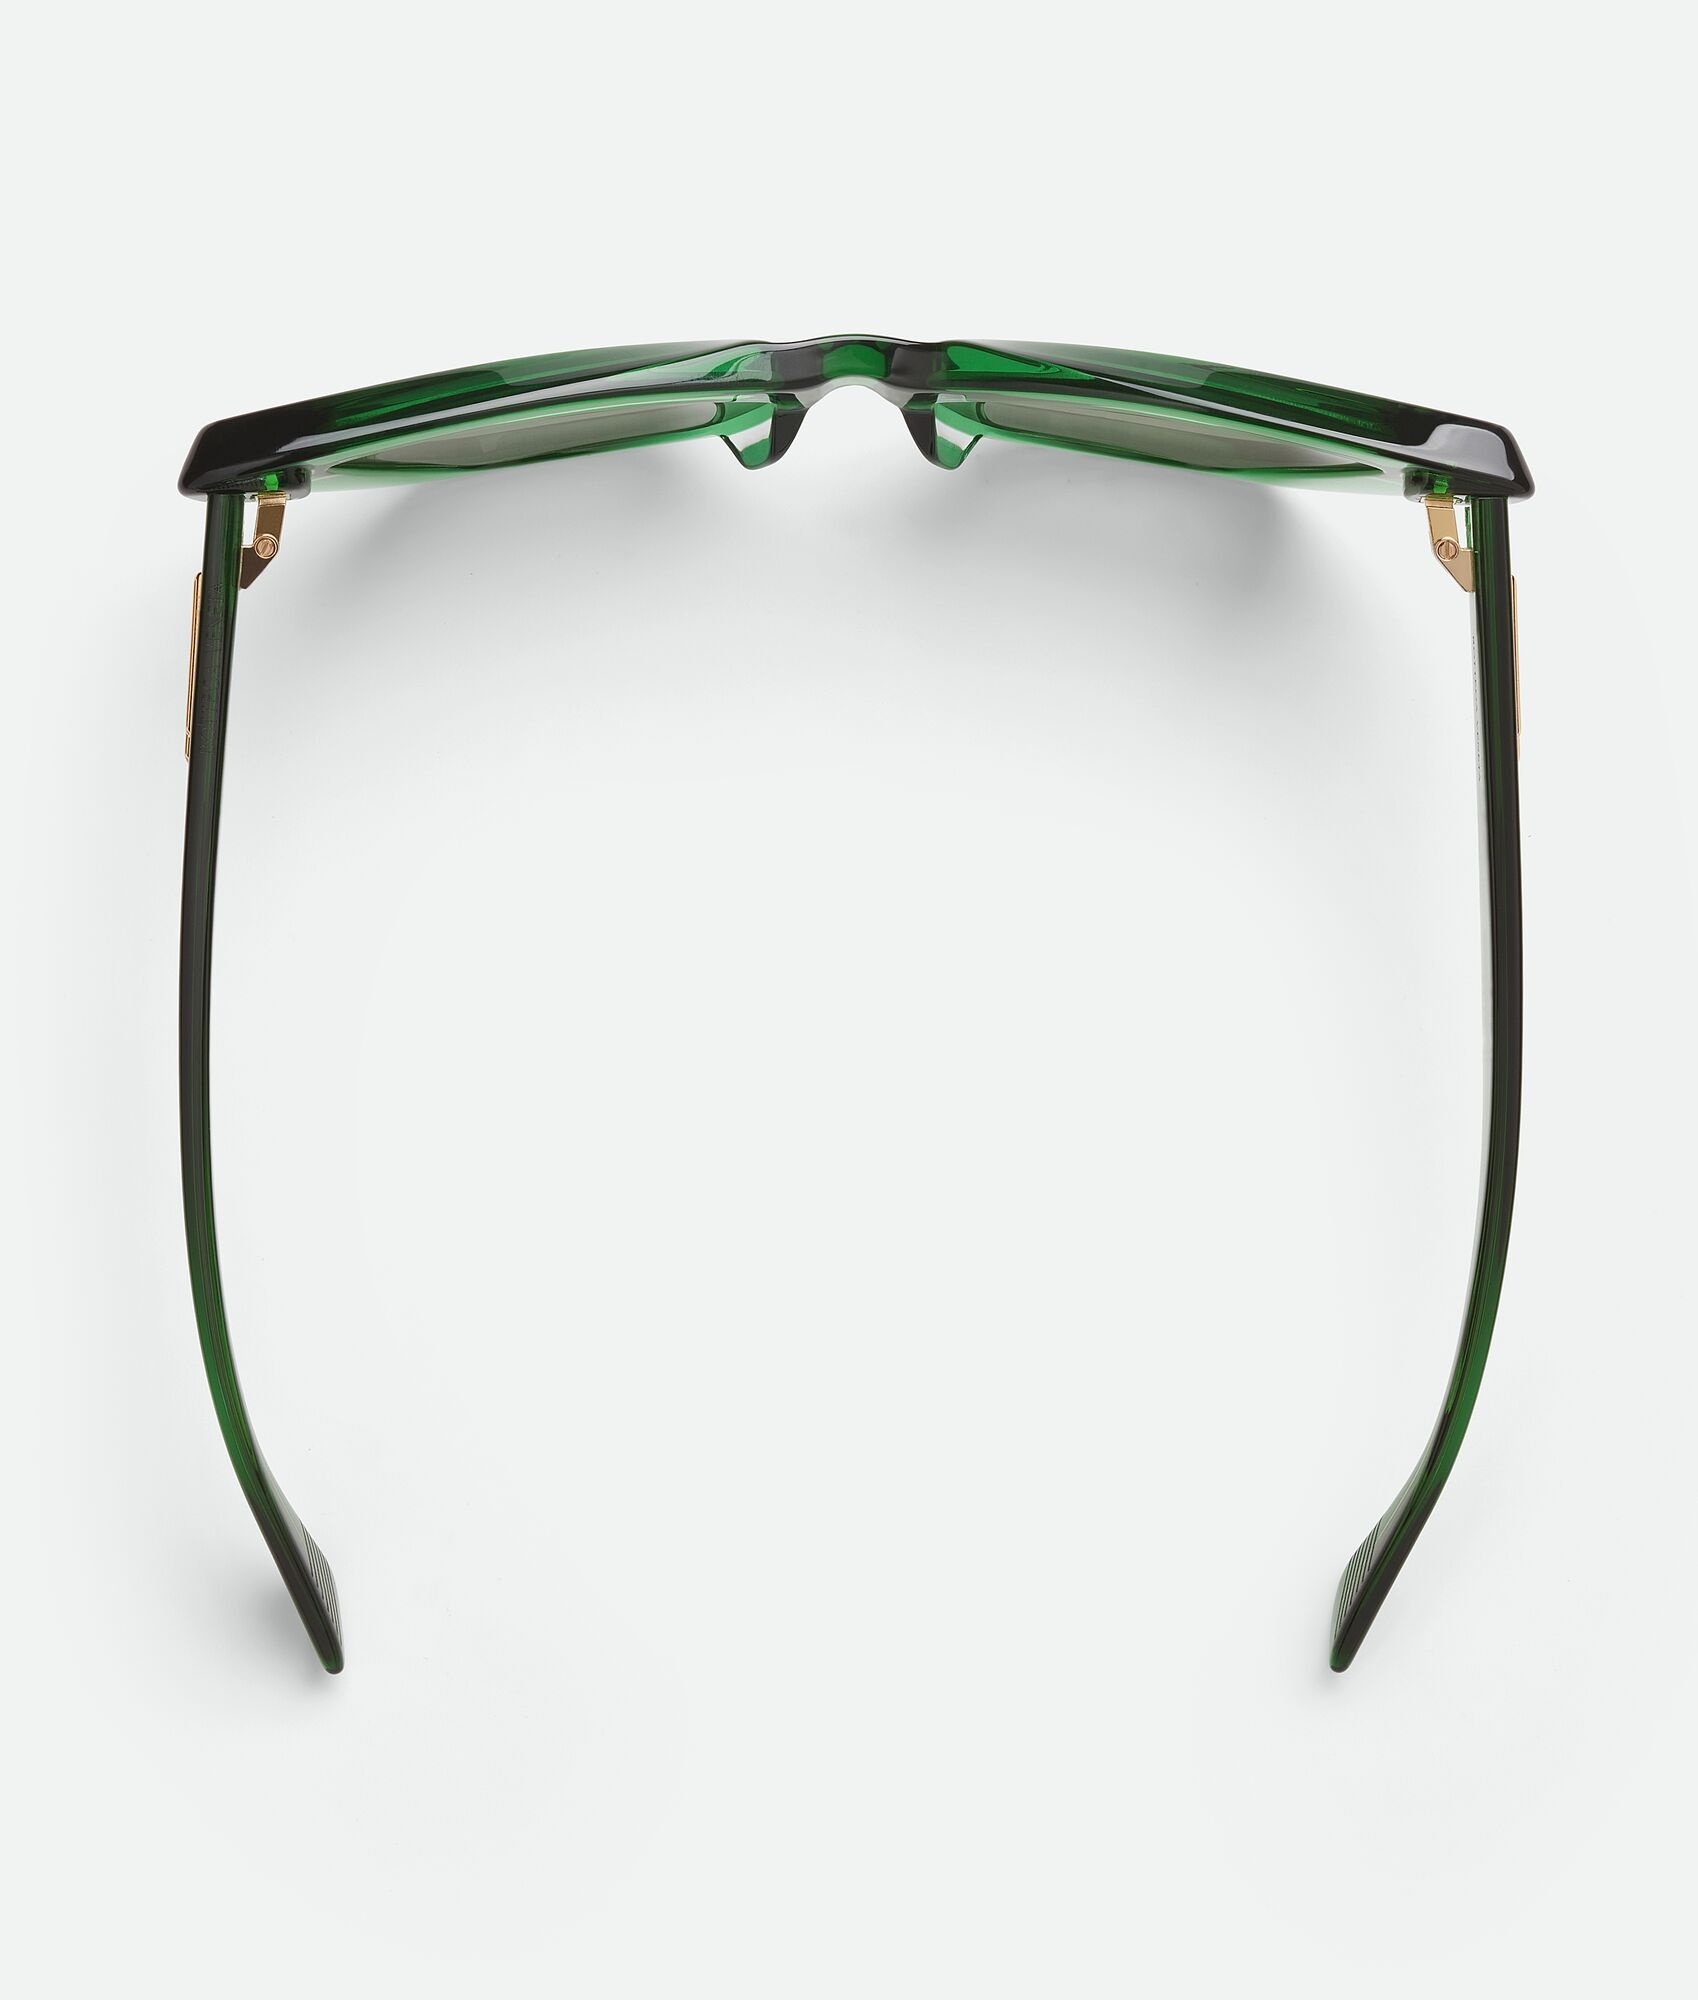 Angle Cat Eye Sunglasses in Green - Bottega Veneta